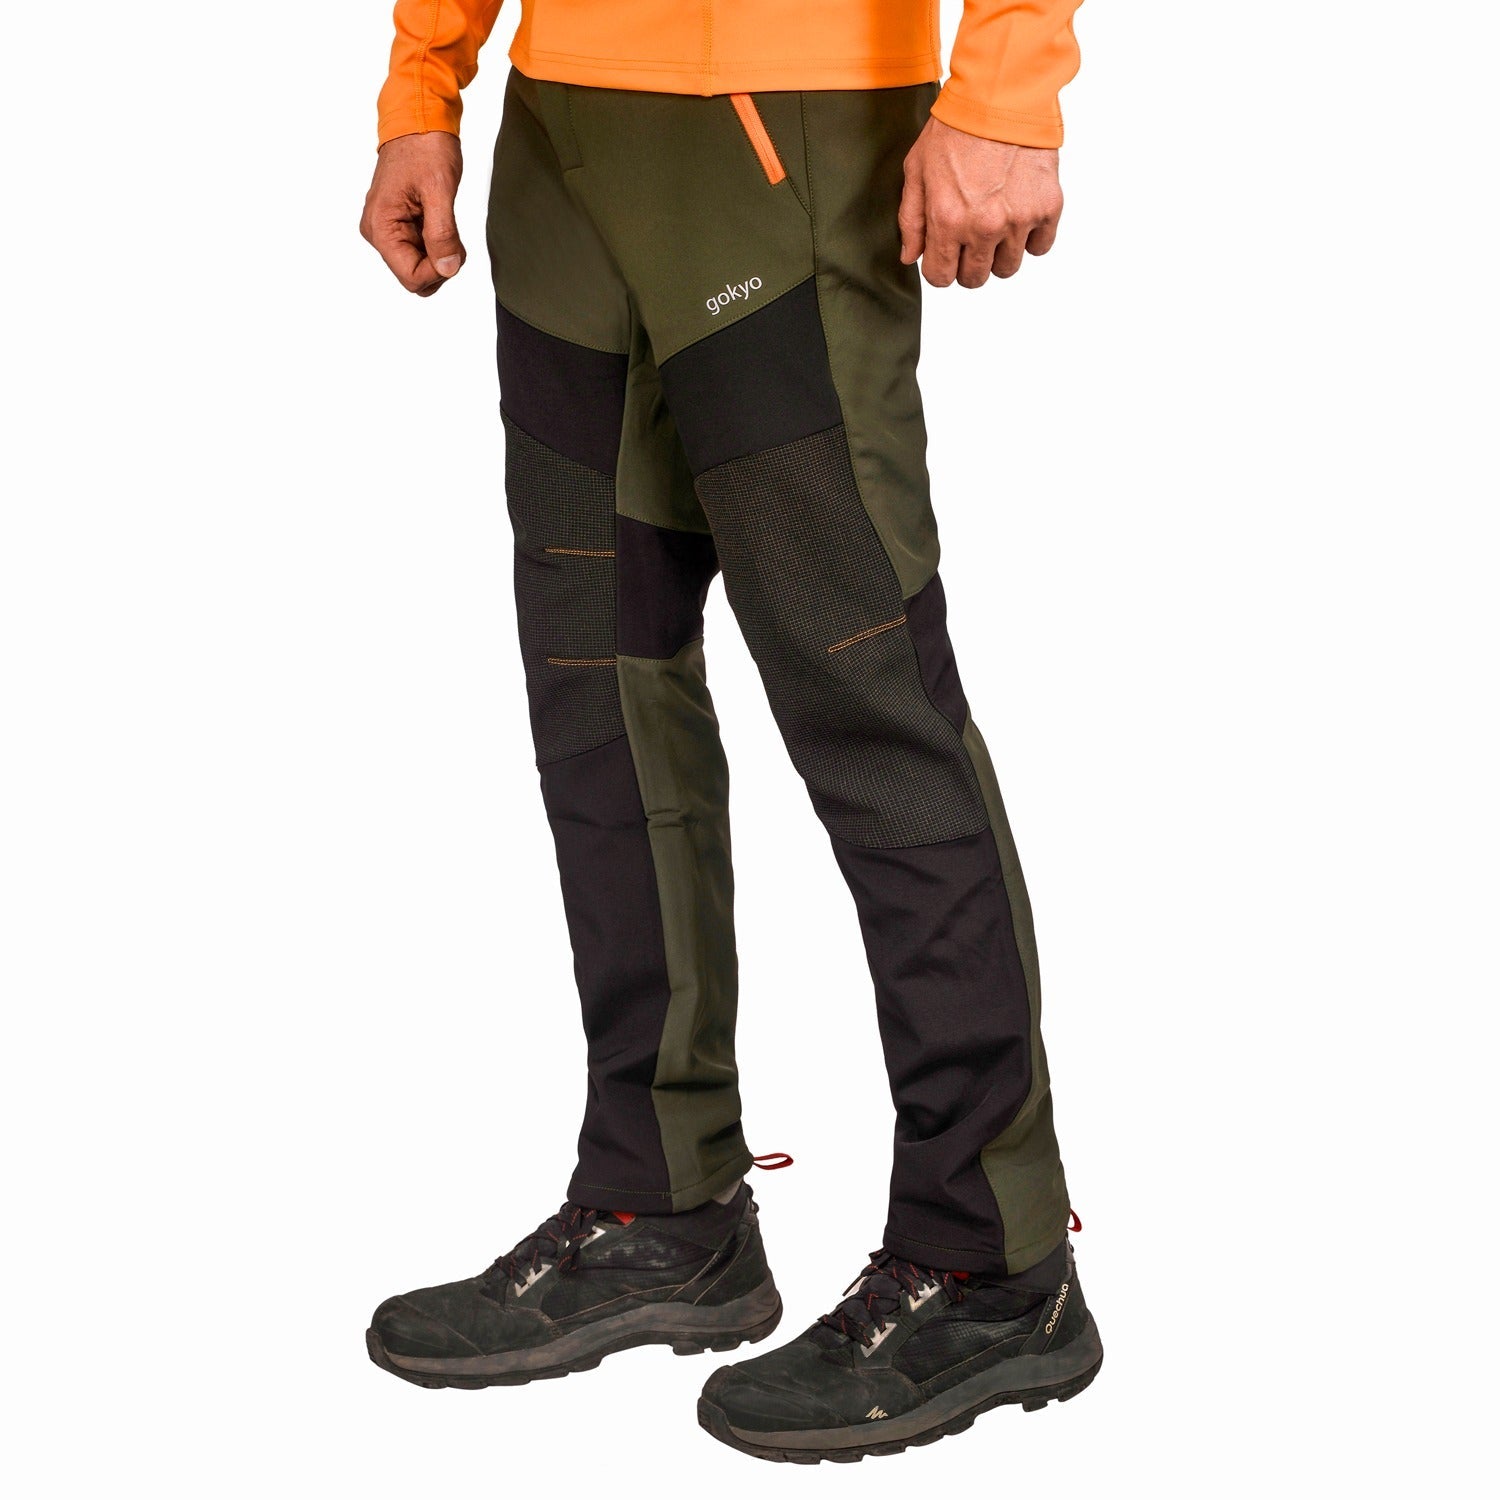 Buy K2 Cold Weather Trekking & Outdoor Pants at Gokyo Outdoor Clothing & Gear